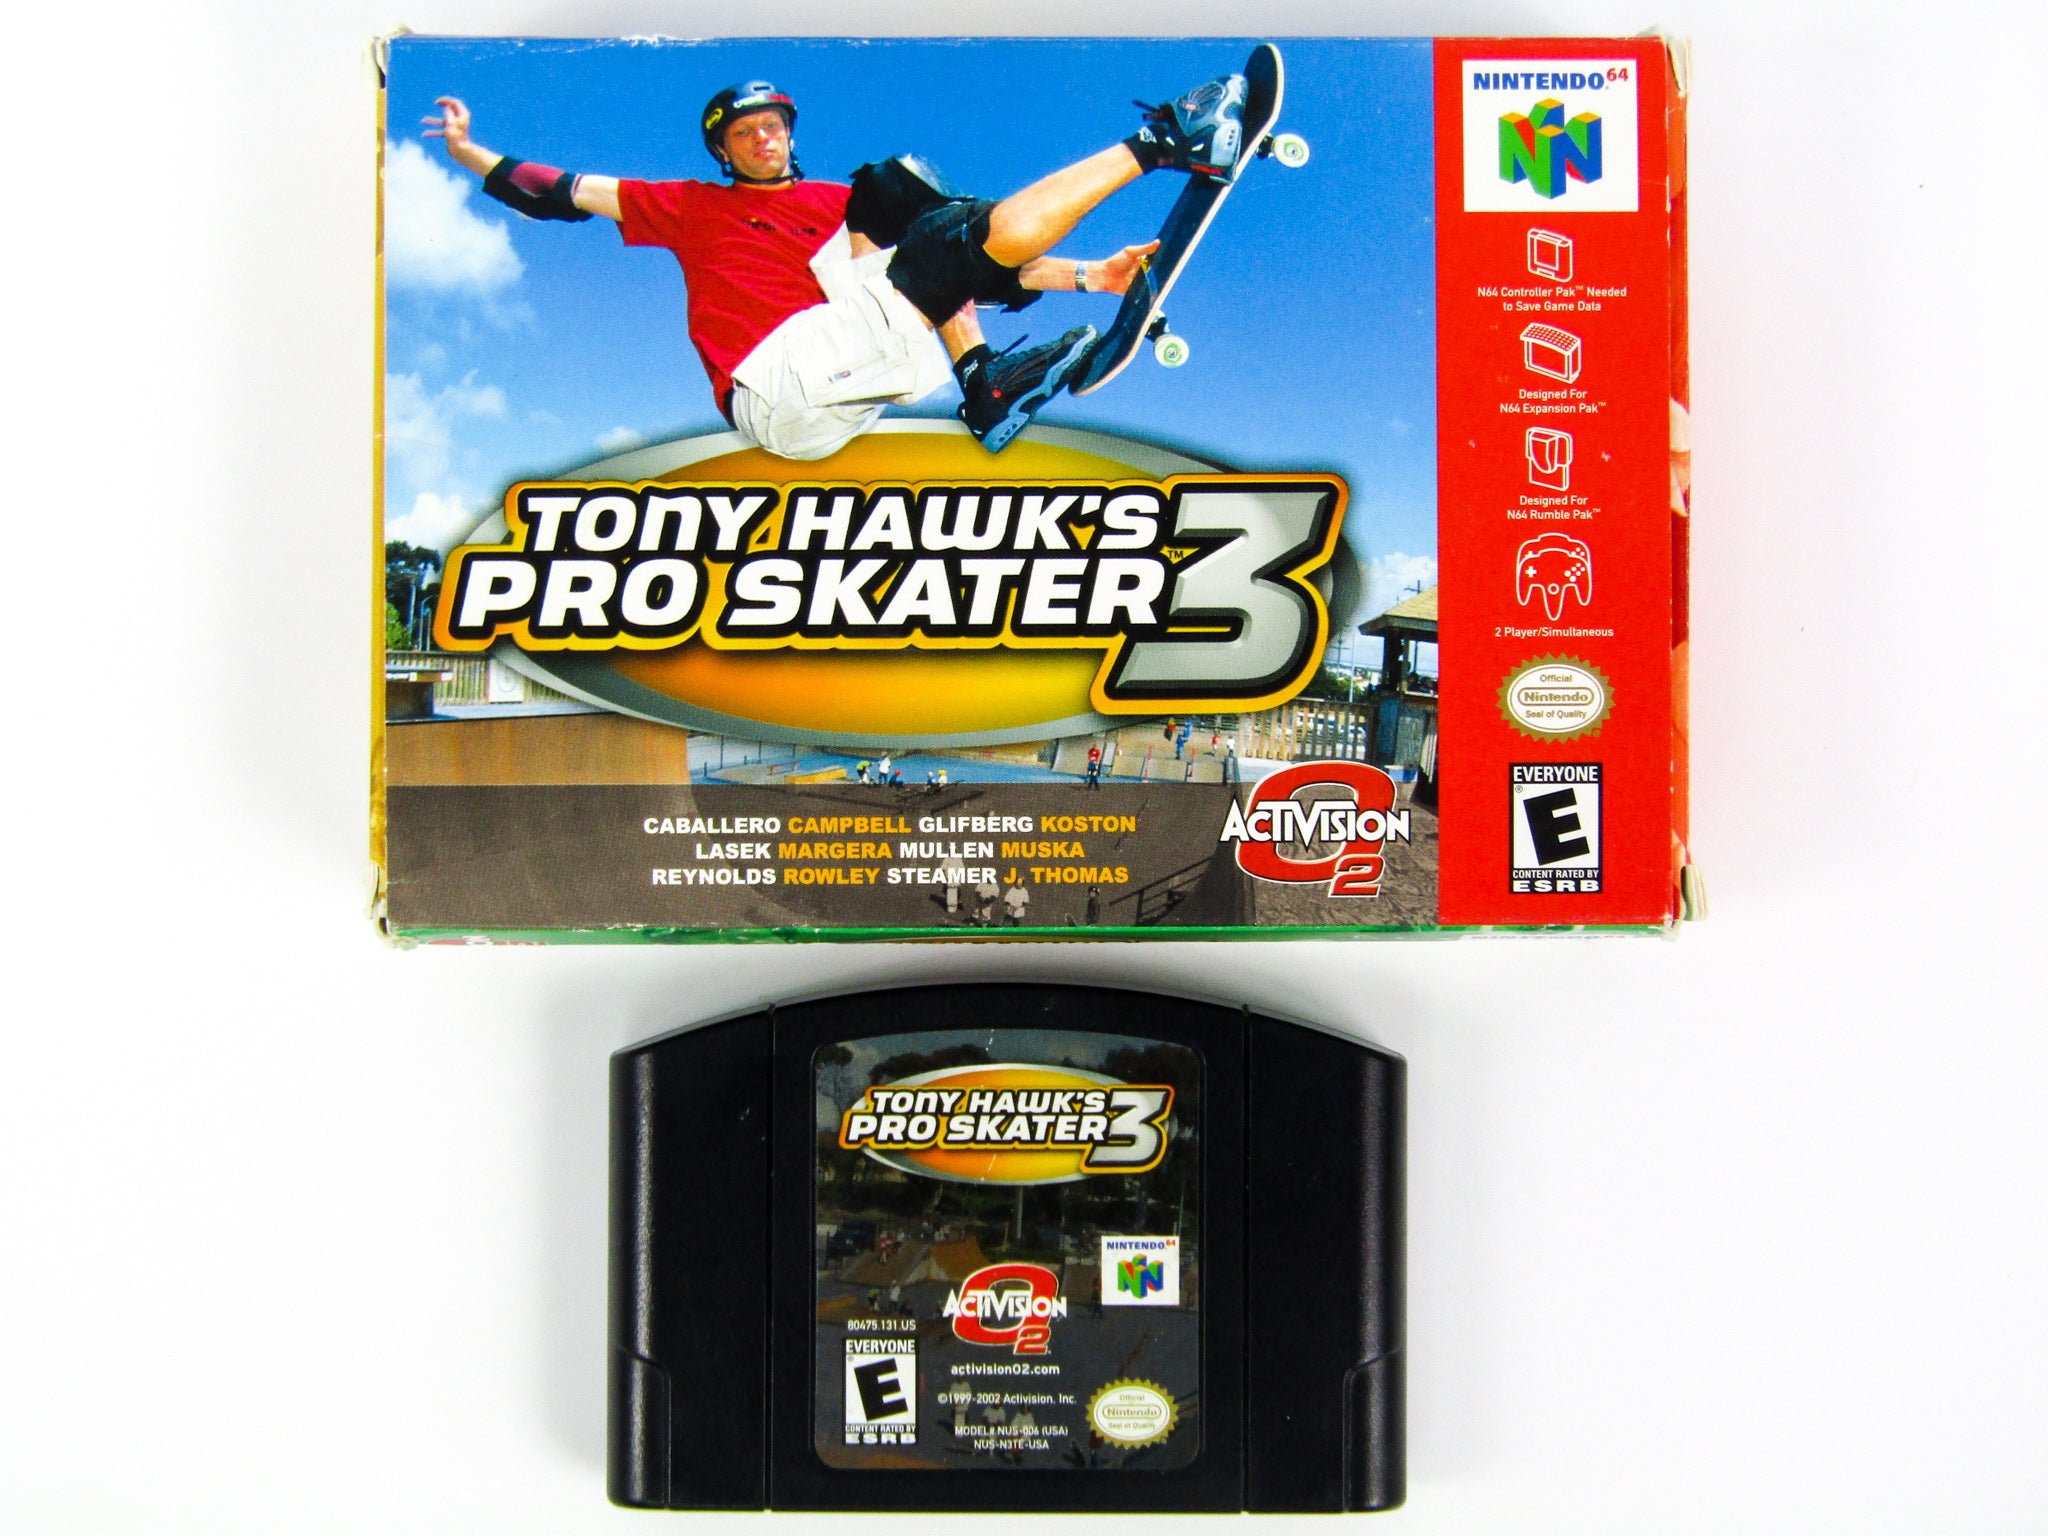 7662: Rocker's N64 Tony Hawk's Pro Skater 3 All Goals and Golds